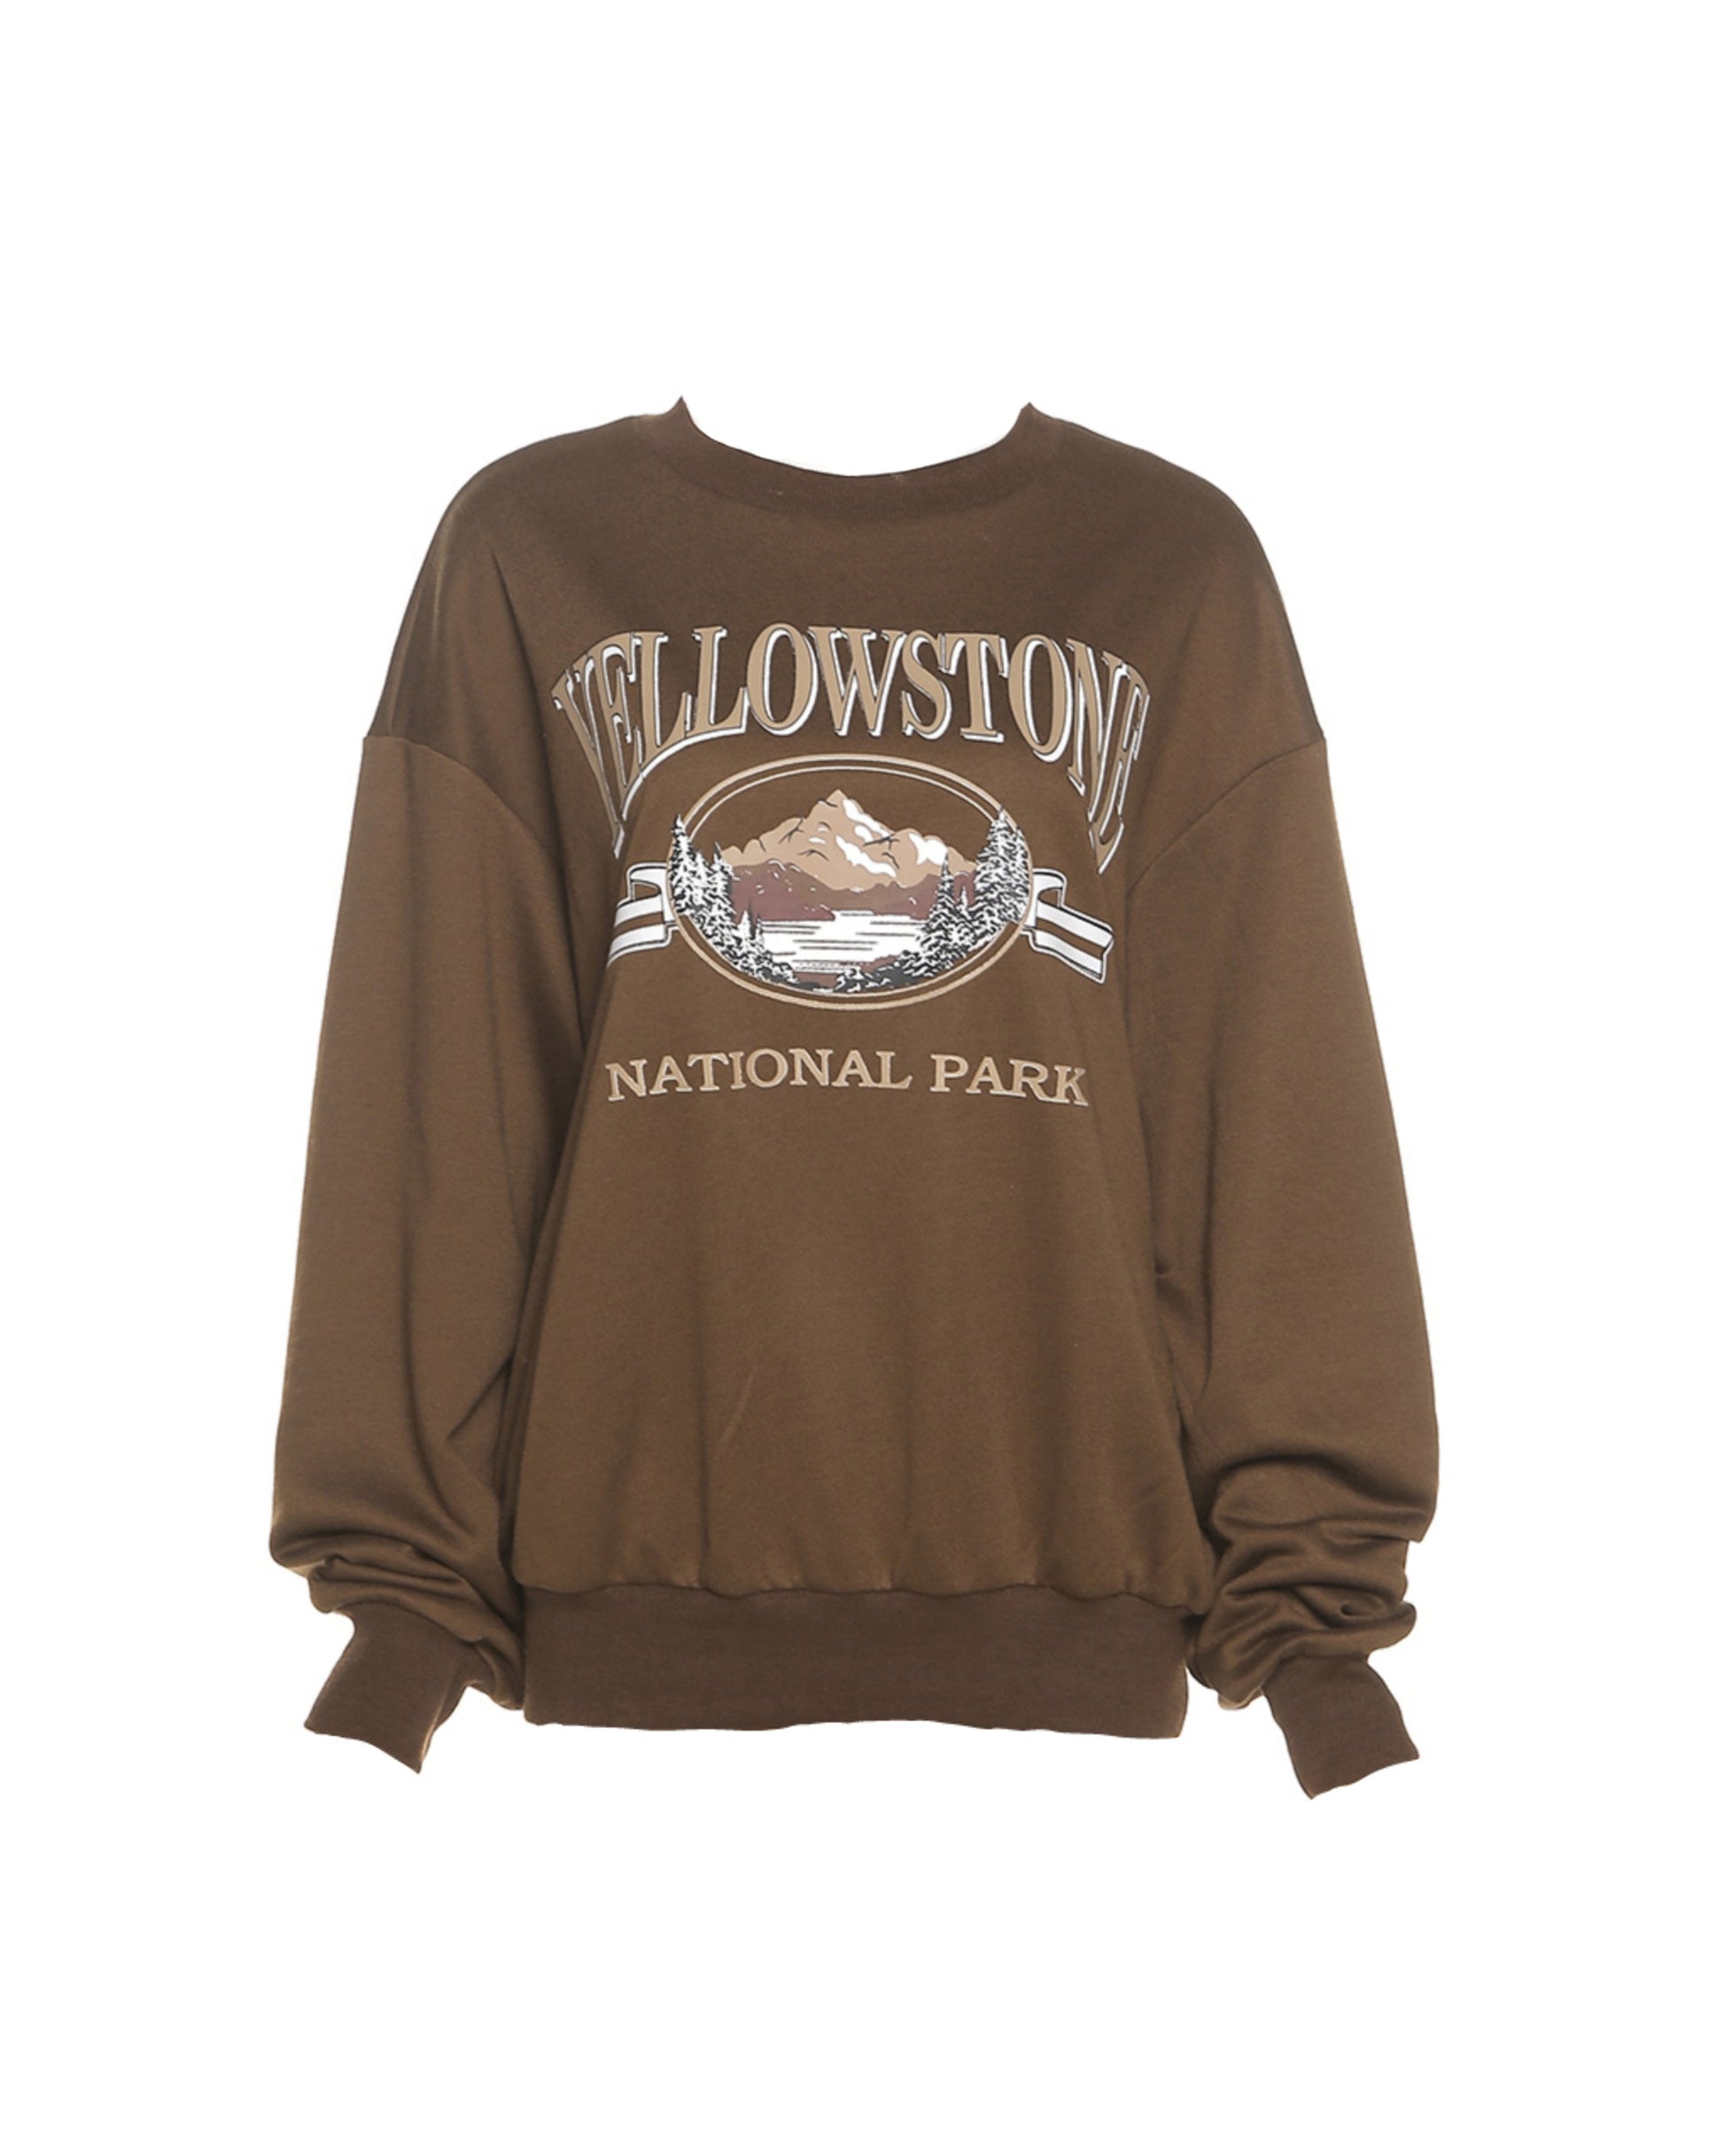 LaPose Fashion - Yellowstone Oversize Sweatshirt - Clothing, Fall22, Home3, Long Sleeve Tops, Tops, Tops/Sweatshirts